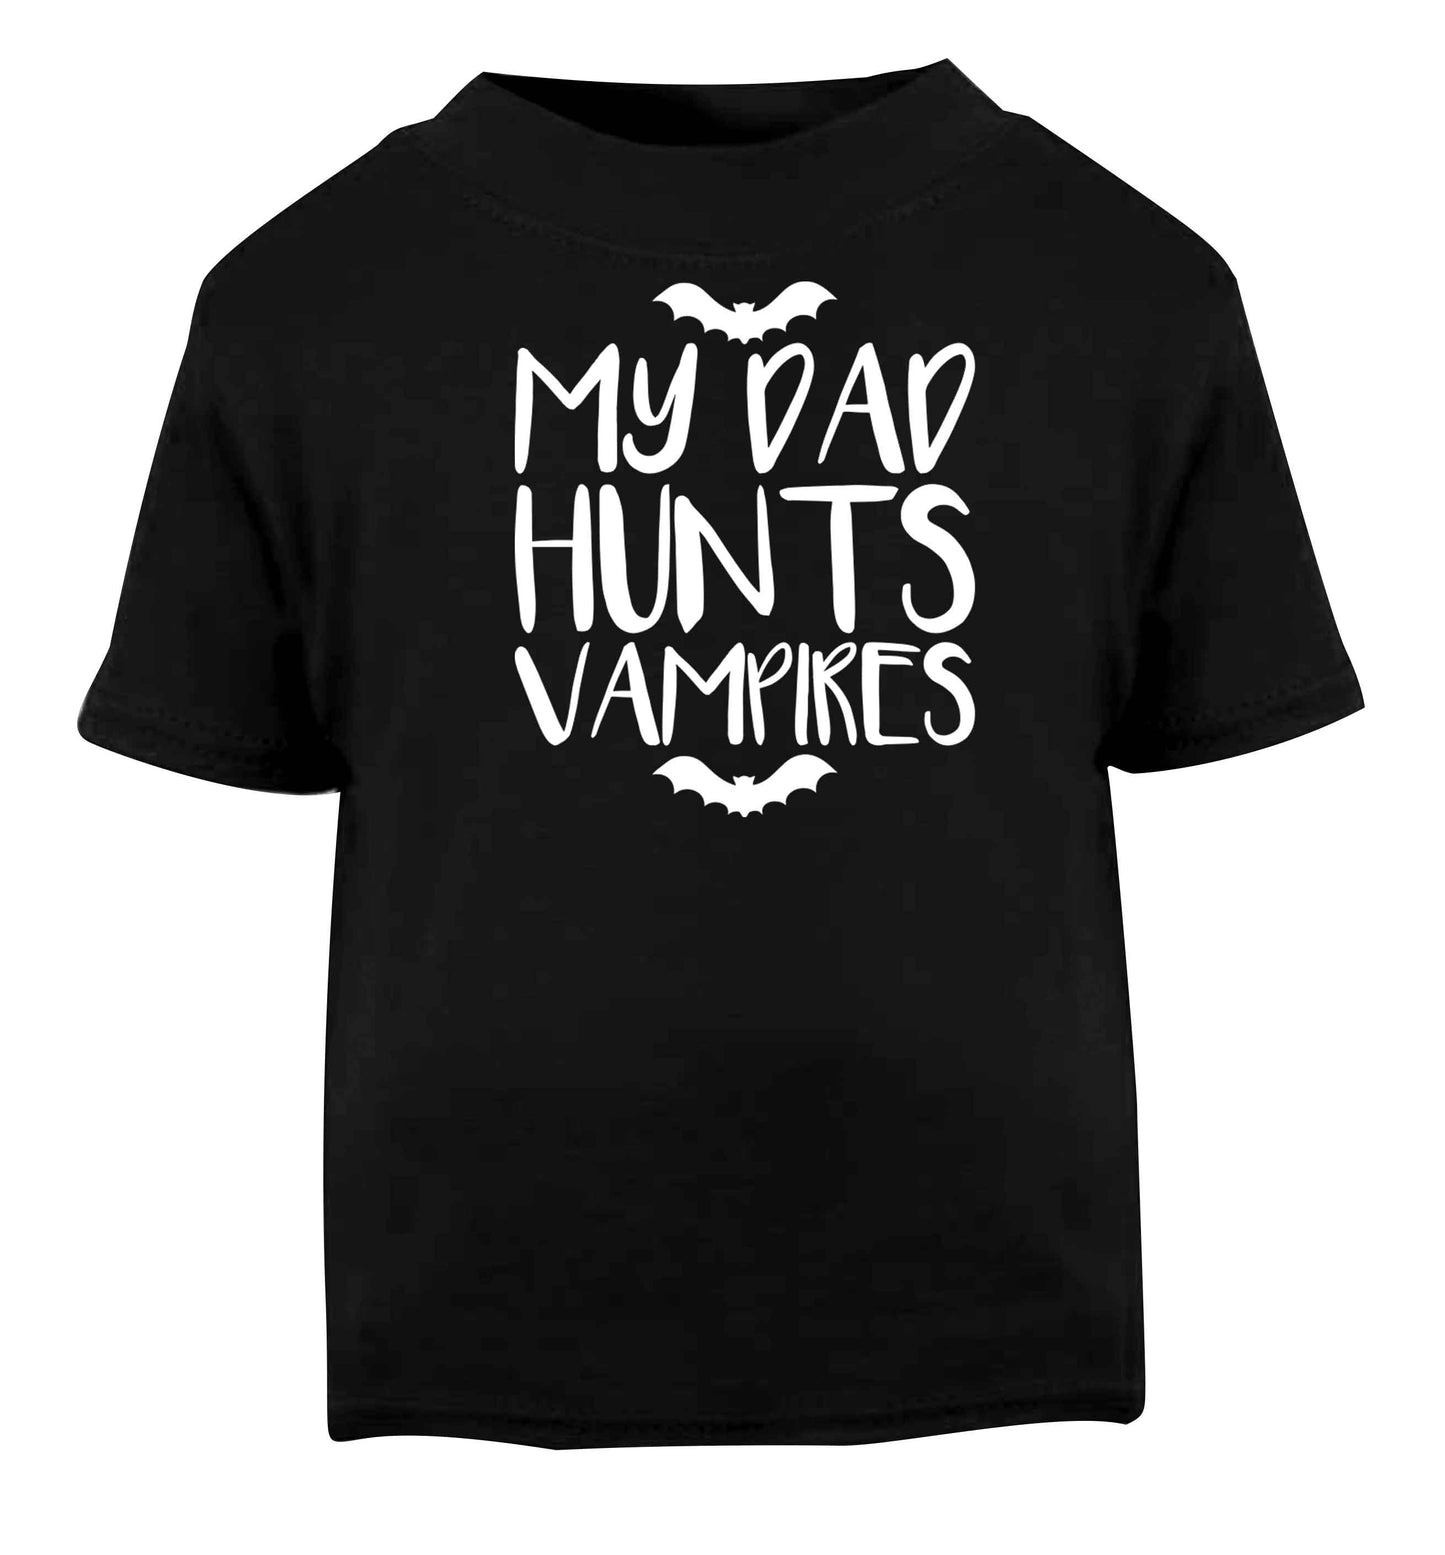 My dad hunts vampires Black baby toddler Tshirt 2 years